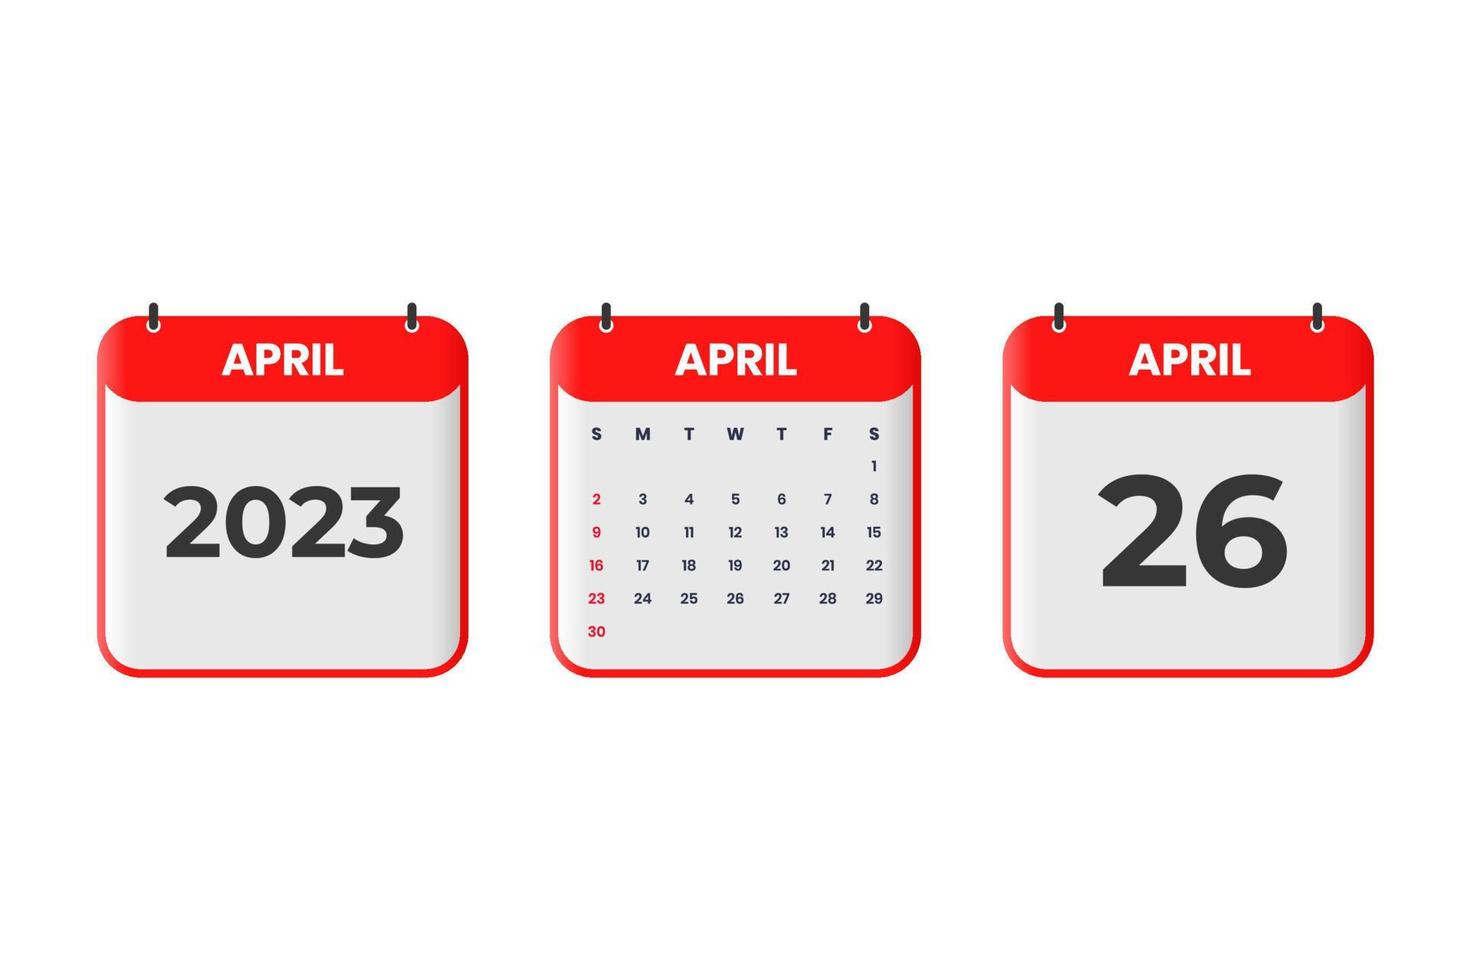 April 2023 Kalenderdesign. 26. April 2023 Kalendersymbol für Zeitplan, Termin, wichtiges Datumskonzept vektor